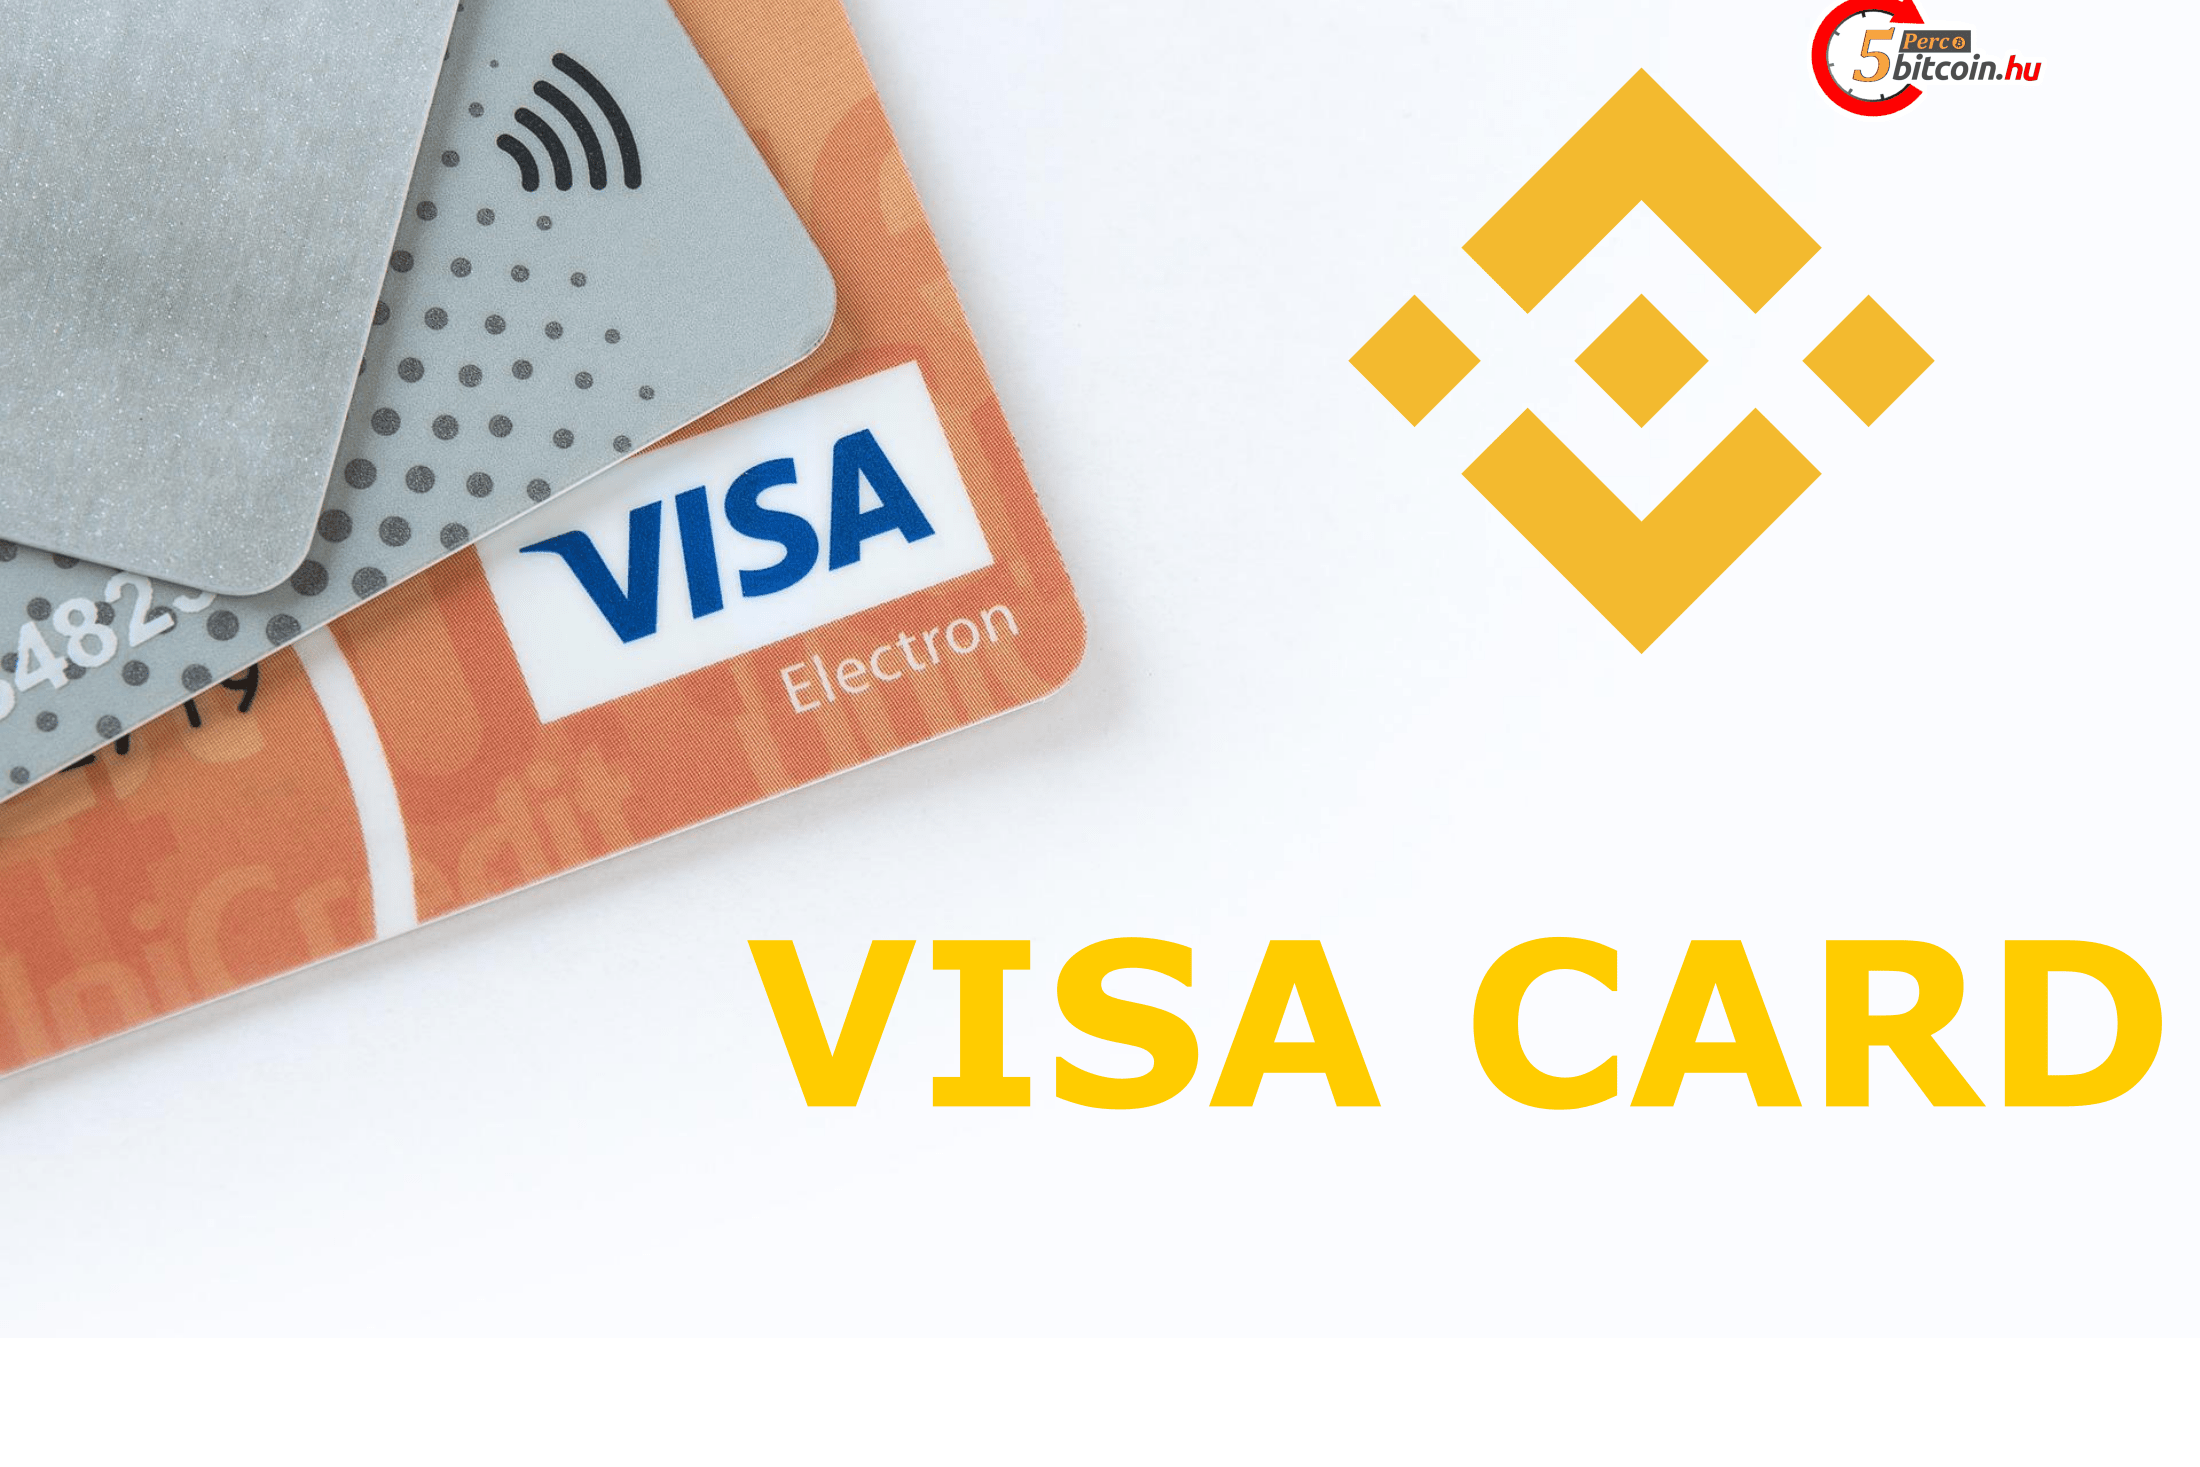 inance-Visa-Card-Velemenyek-es-Ismerteto-Binance-Visa-Card-Hasznalata-Lepesrol-Lepesre-5percbitcoin